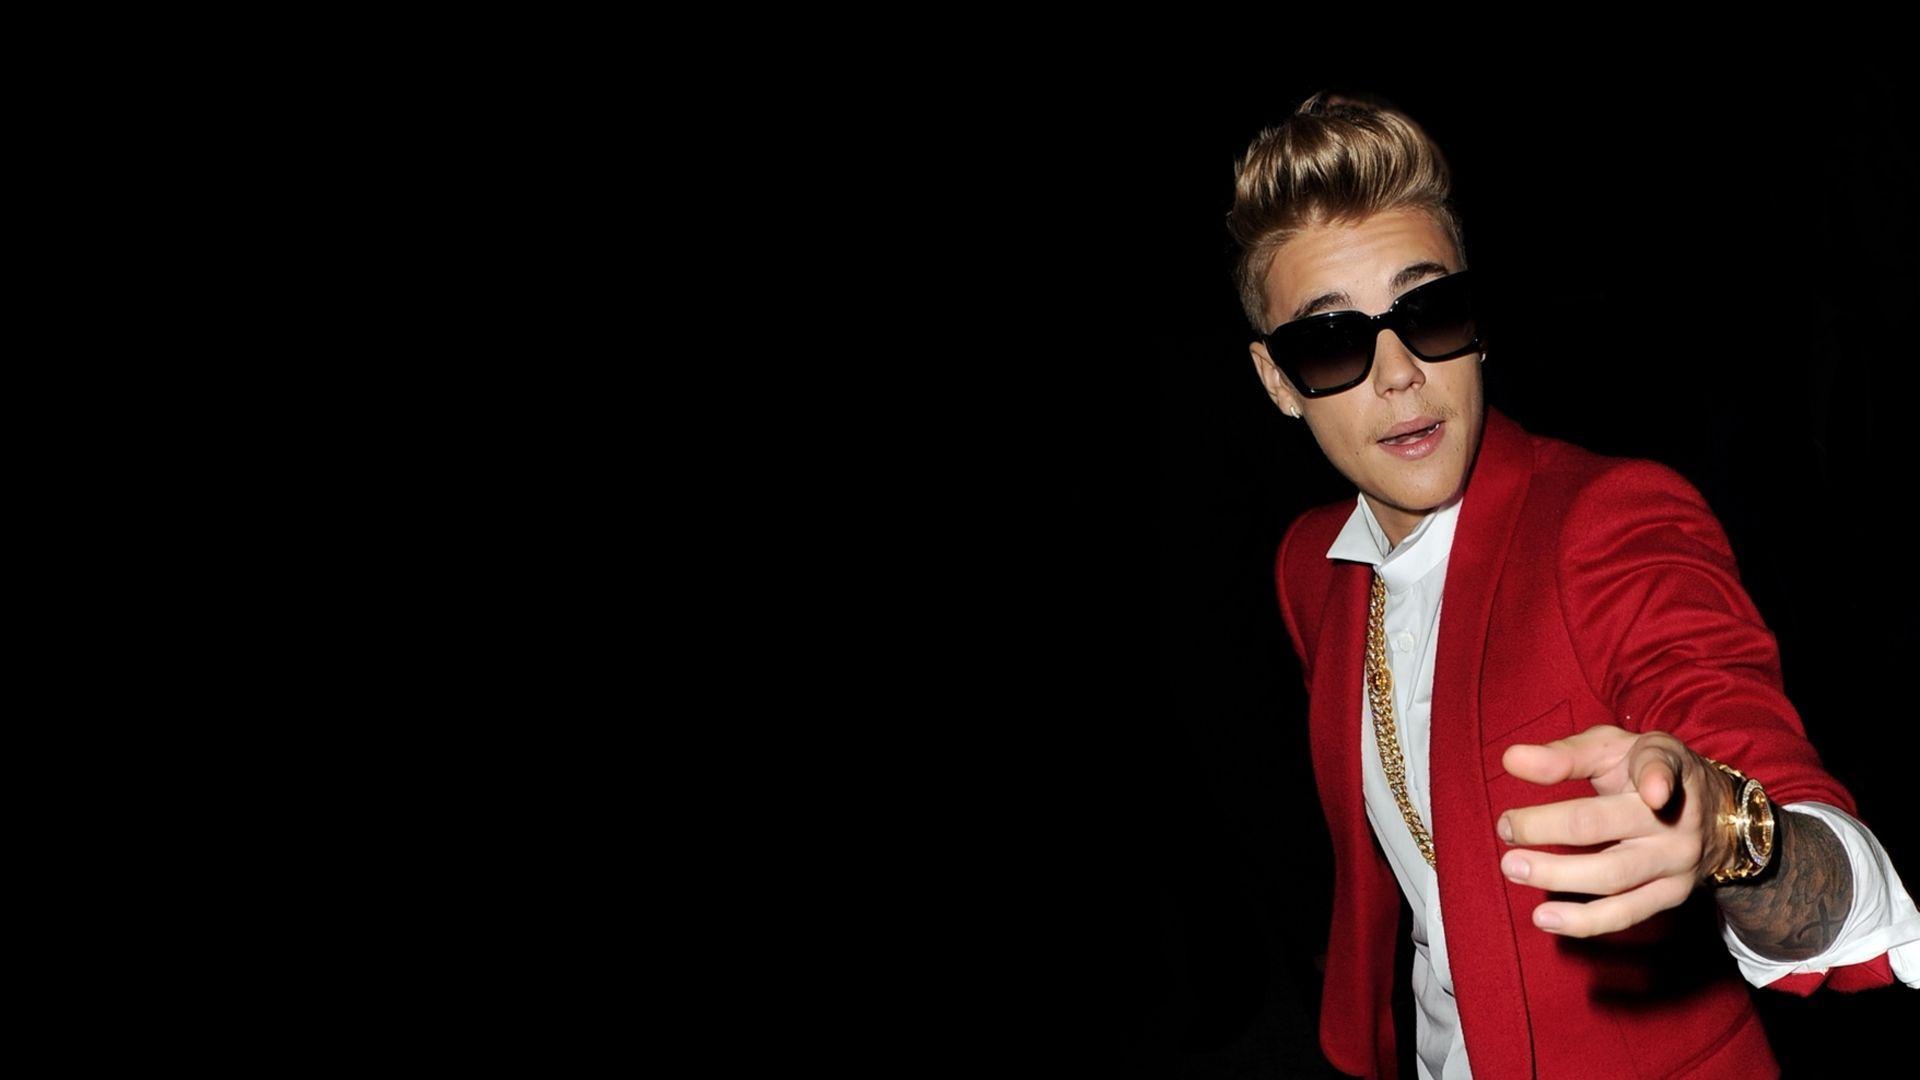 Cool Justin Bieber Background. Wallpaper, Background, Image